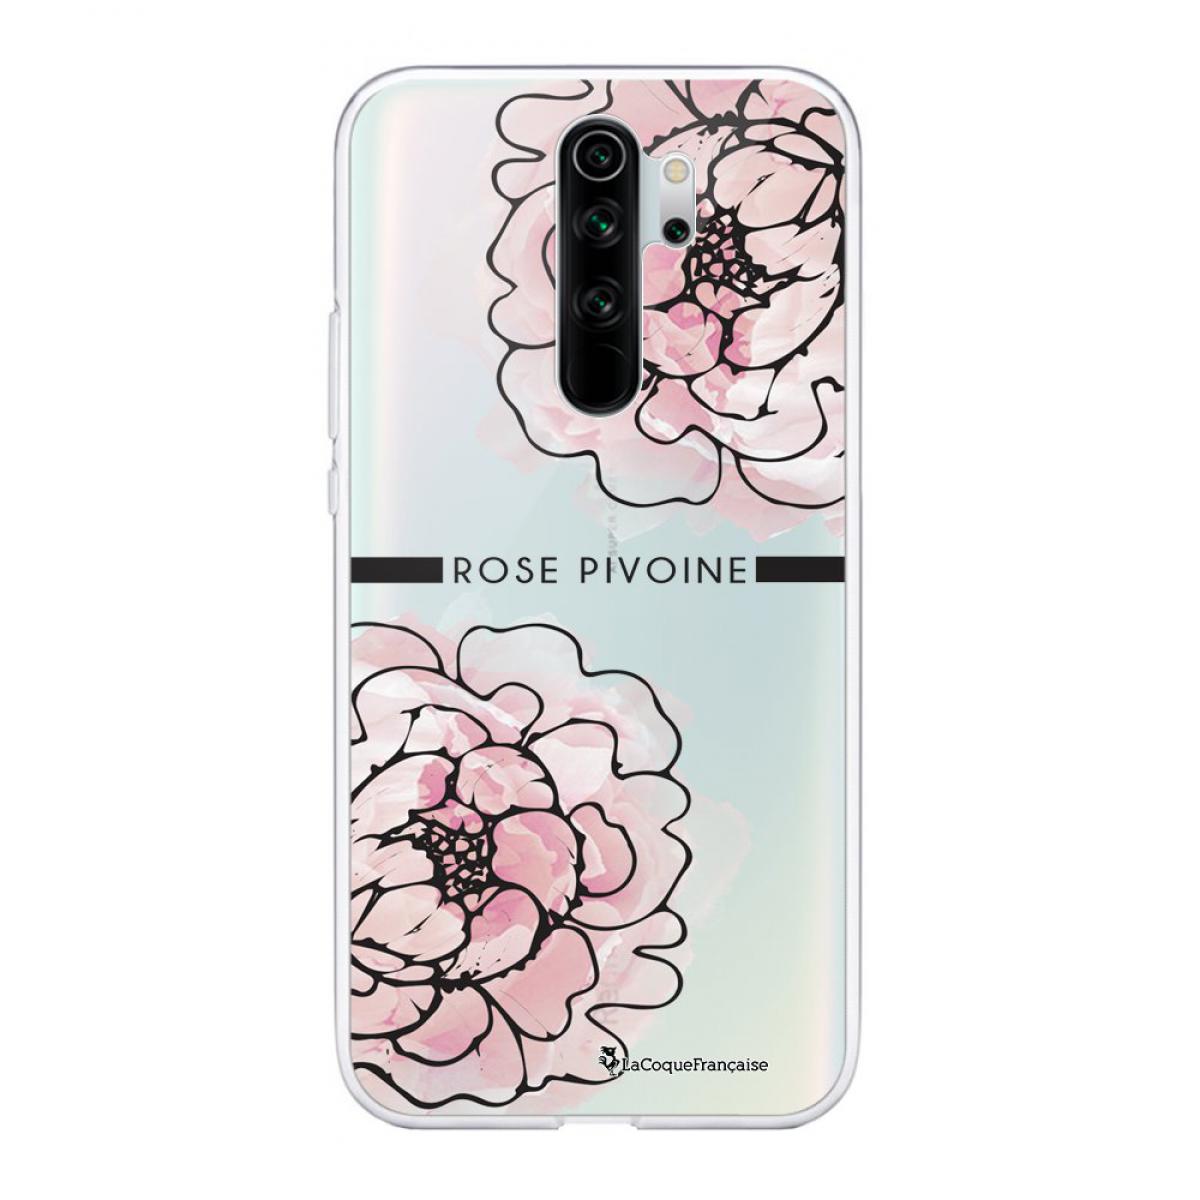 La Coque Francaise - Coque Xiaomi Redmi Note 8 Pro 360 intégrale transparente Rose Pivoine Tendance La Coque Francaise. - Coque, étui smartphone